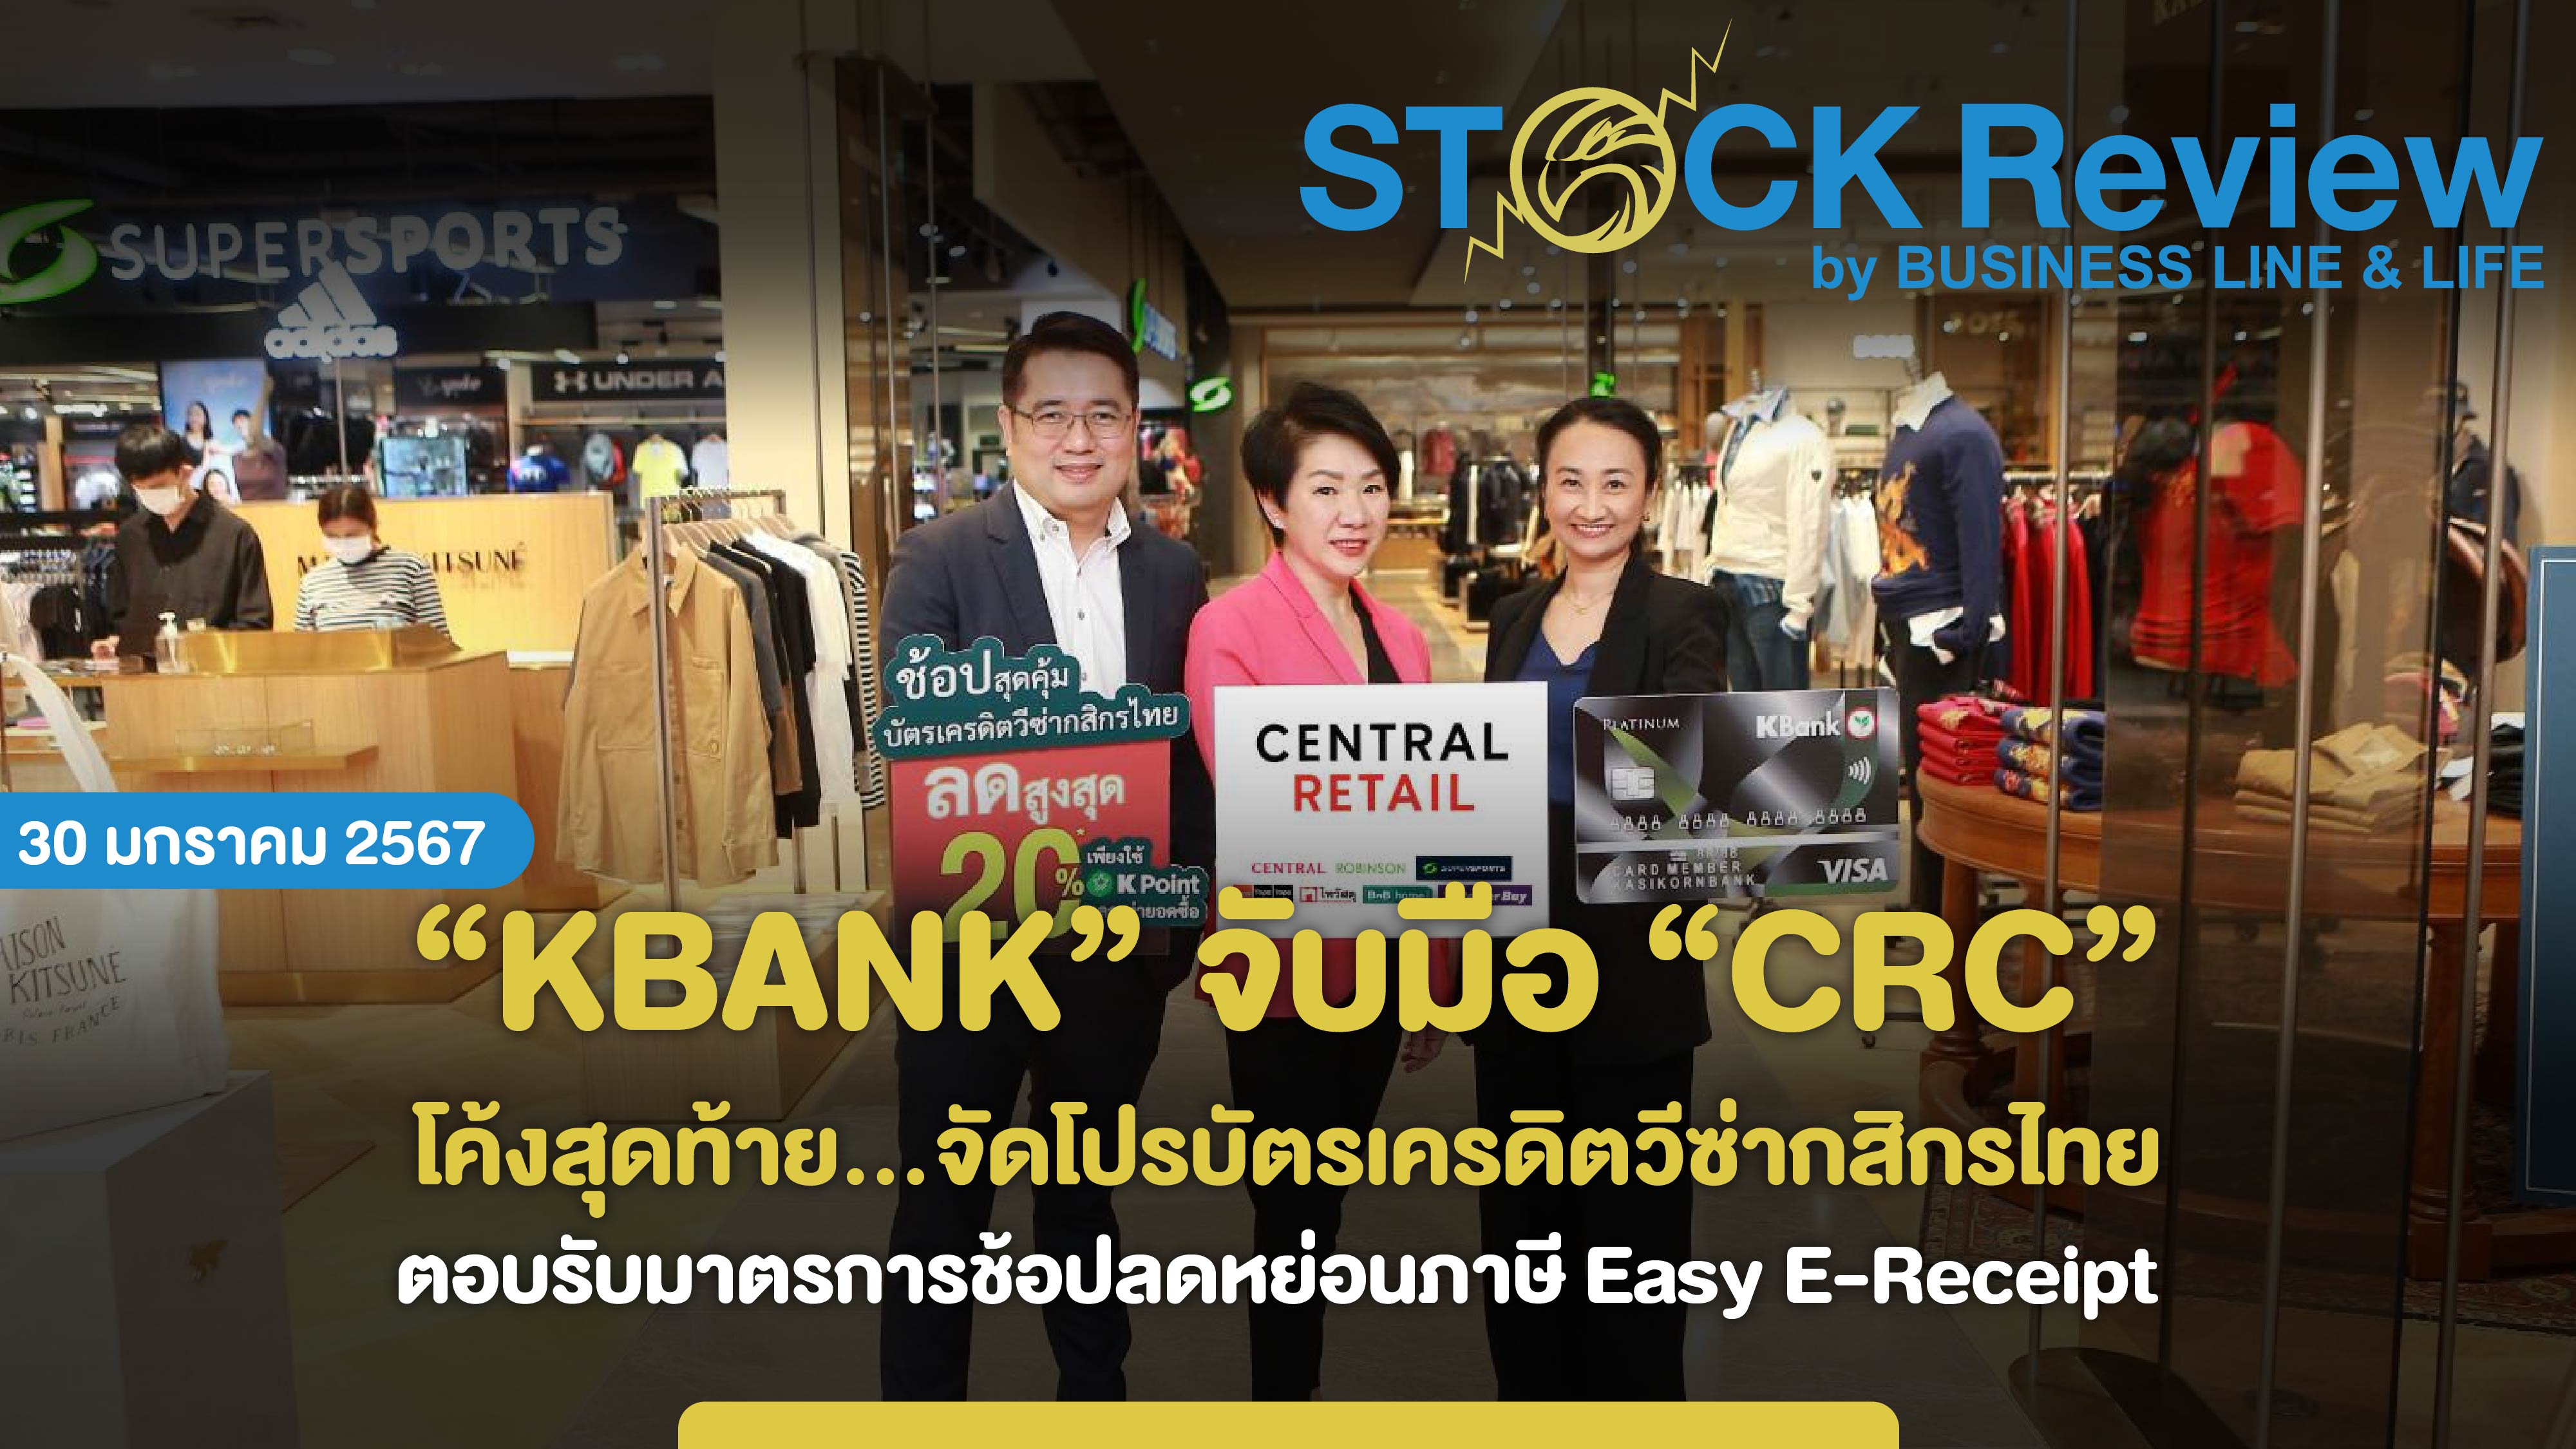 “KBANK” จับมือ “CRC” โค้งสุดท้าย...จัดโปรบัตรเครดิตวีซ่ากสิกรไทย